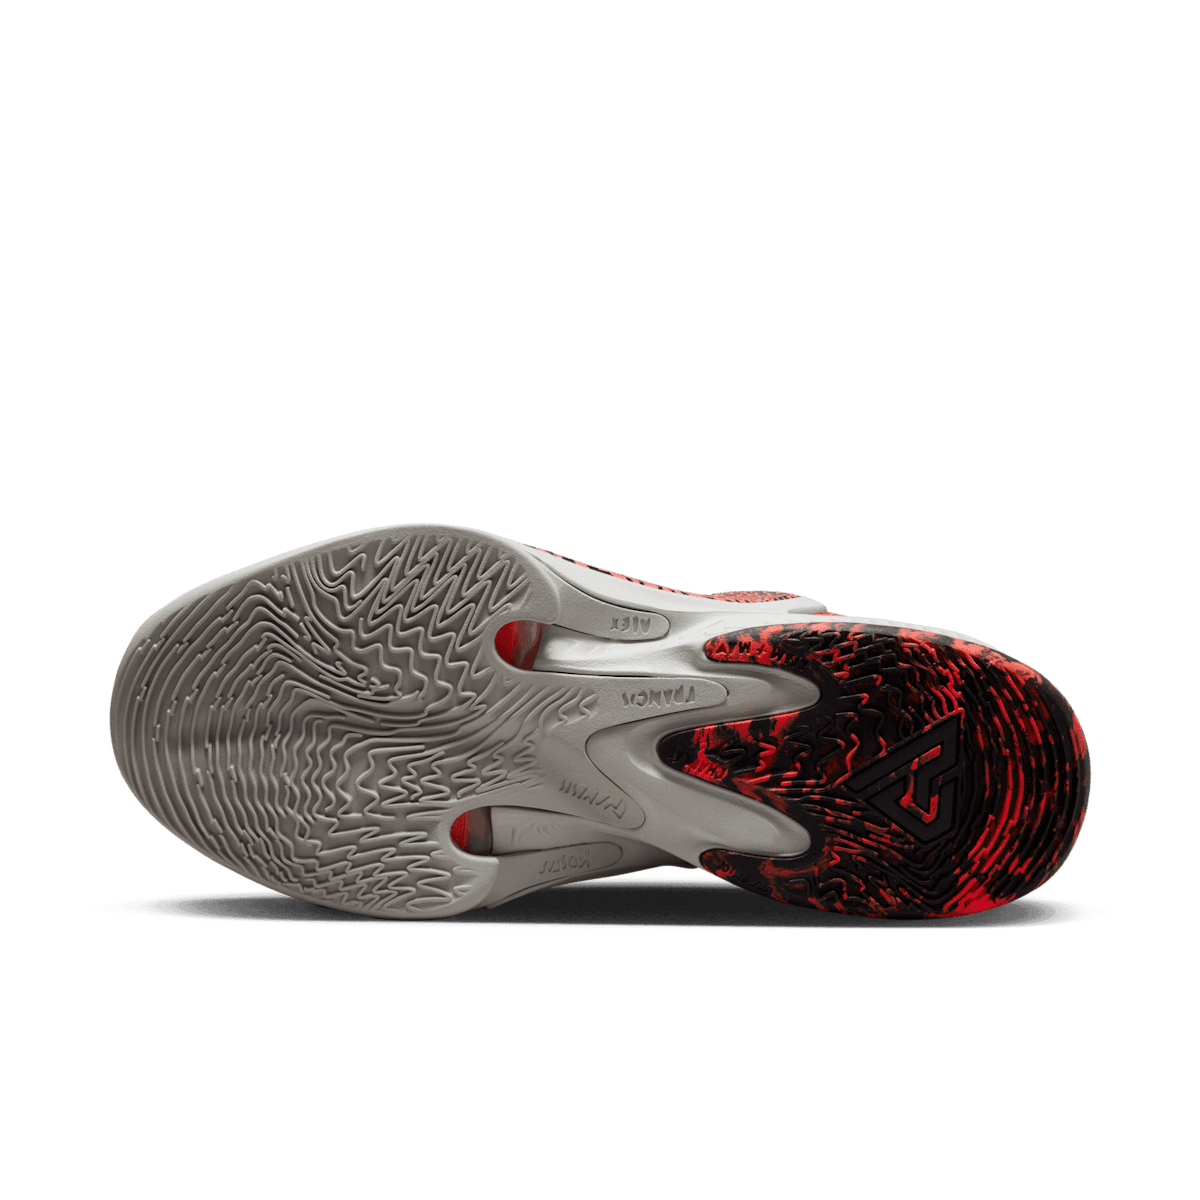 Nike Zoom Freak 4 "Safari" Basketball Shoes in Red Angle 0